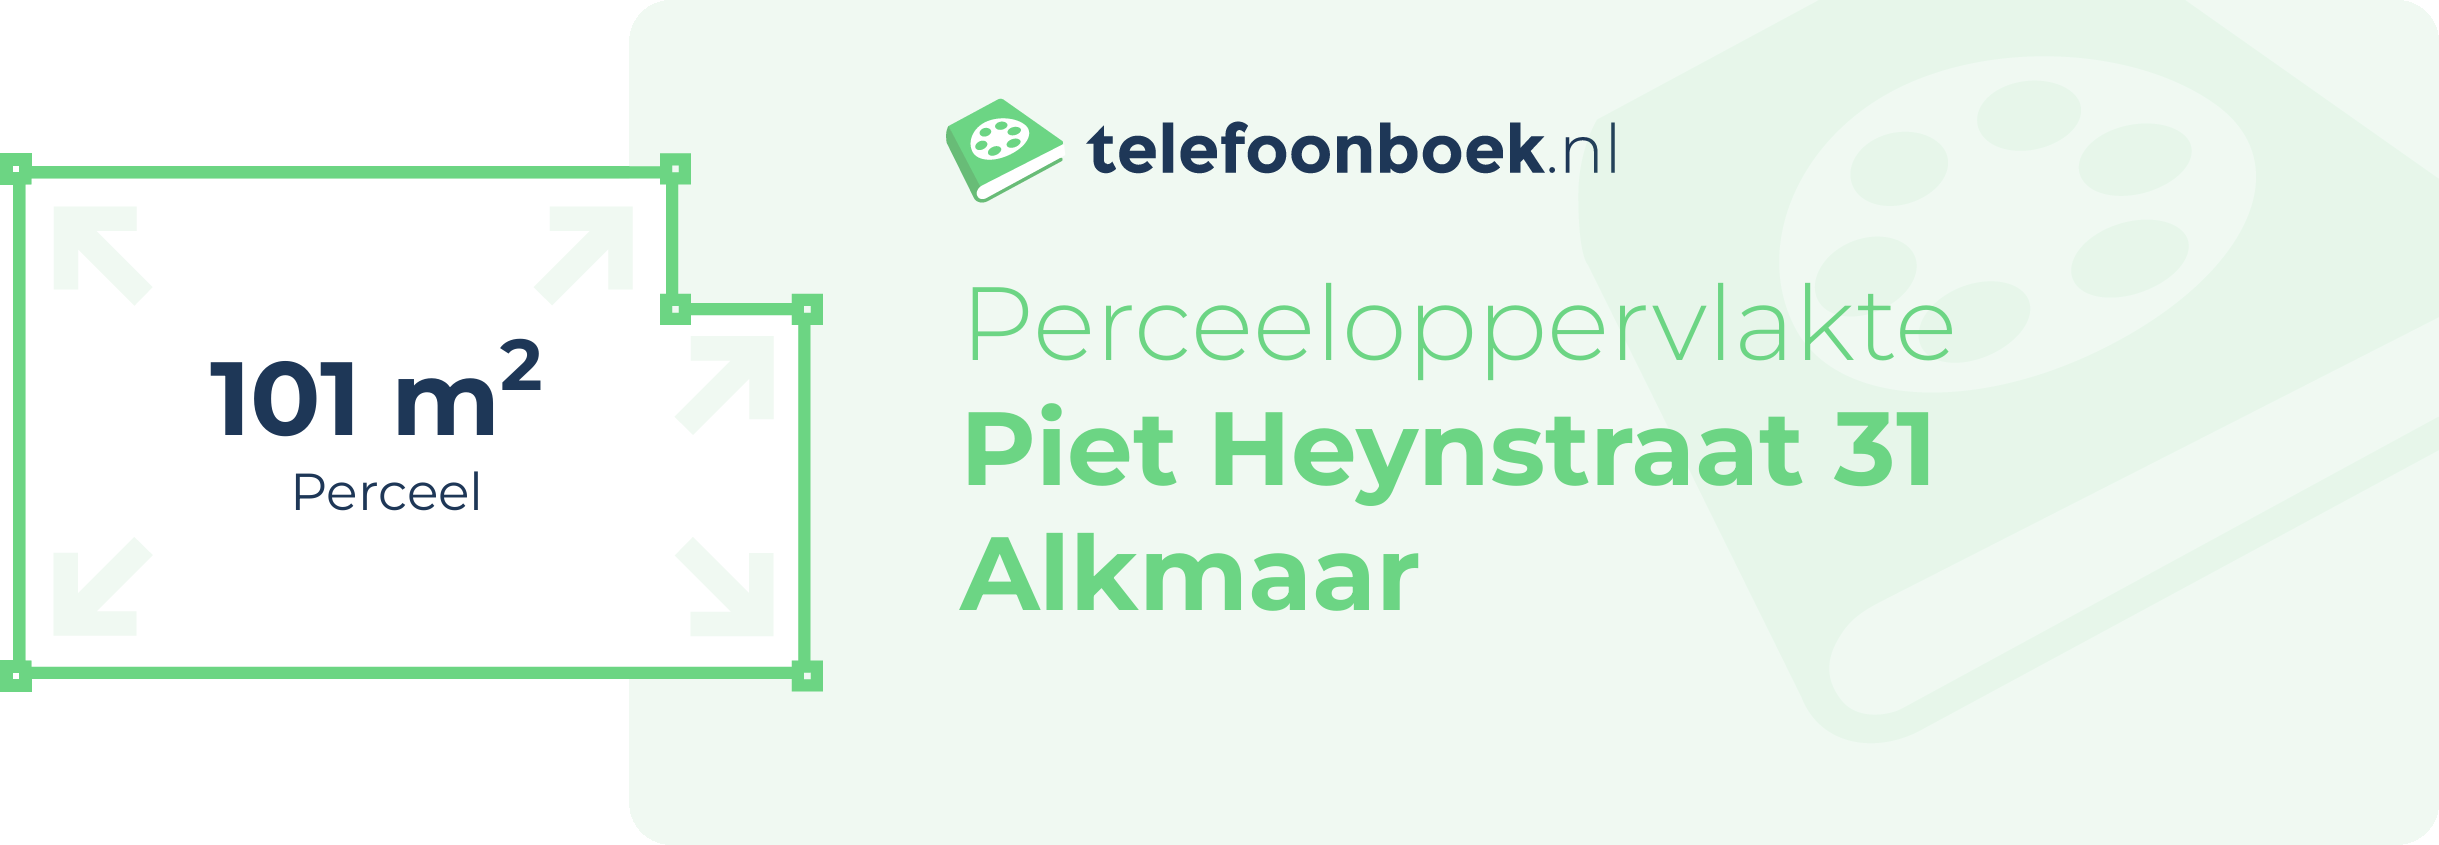 Perceeloppervlakte Piet Heynstraat 31 Alkmaar